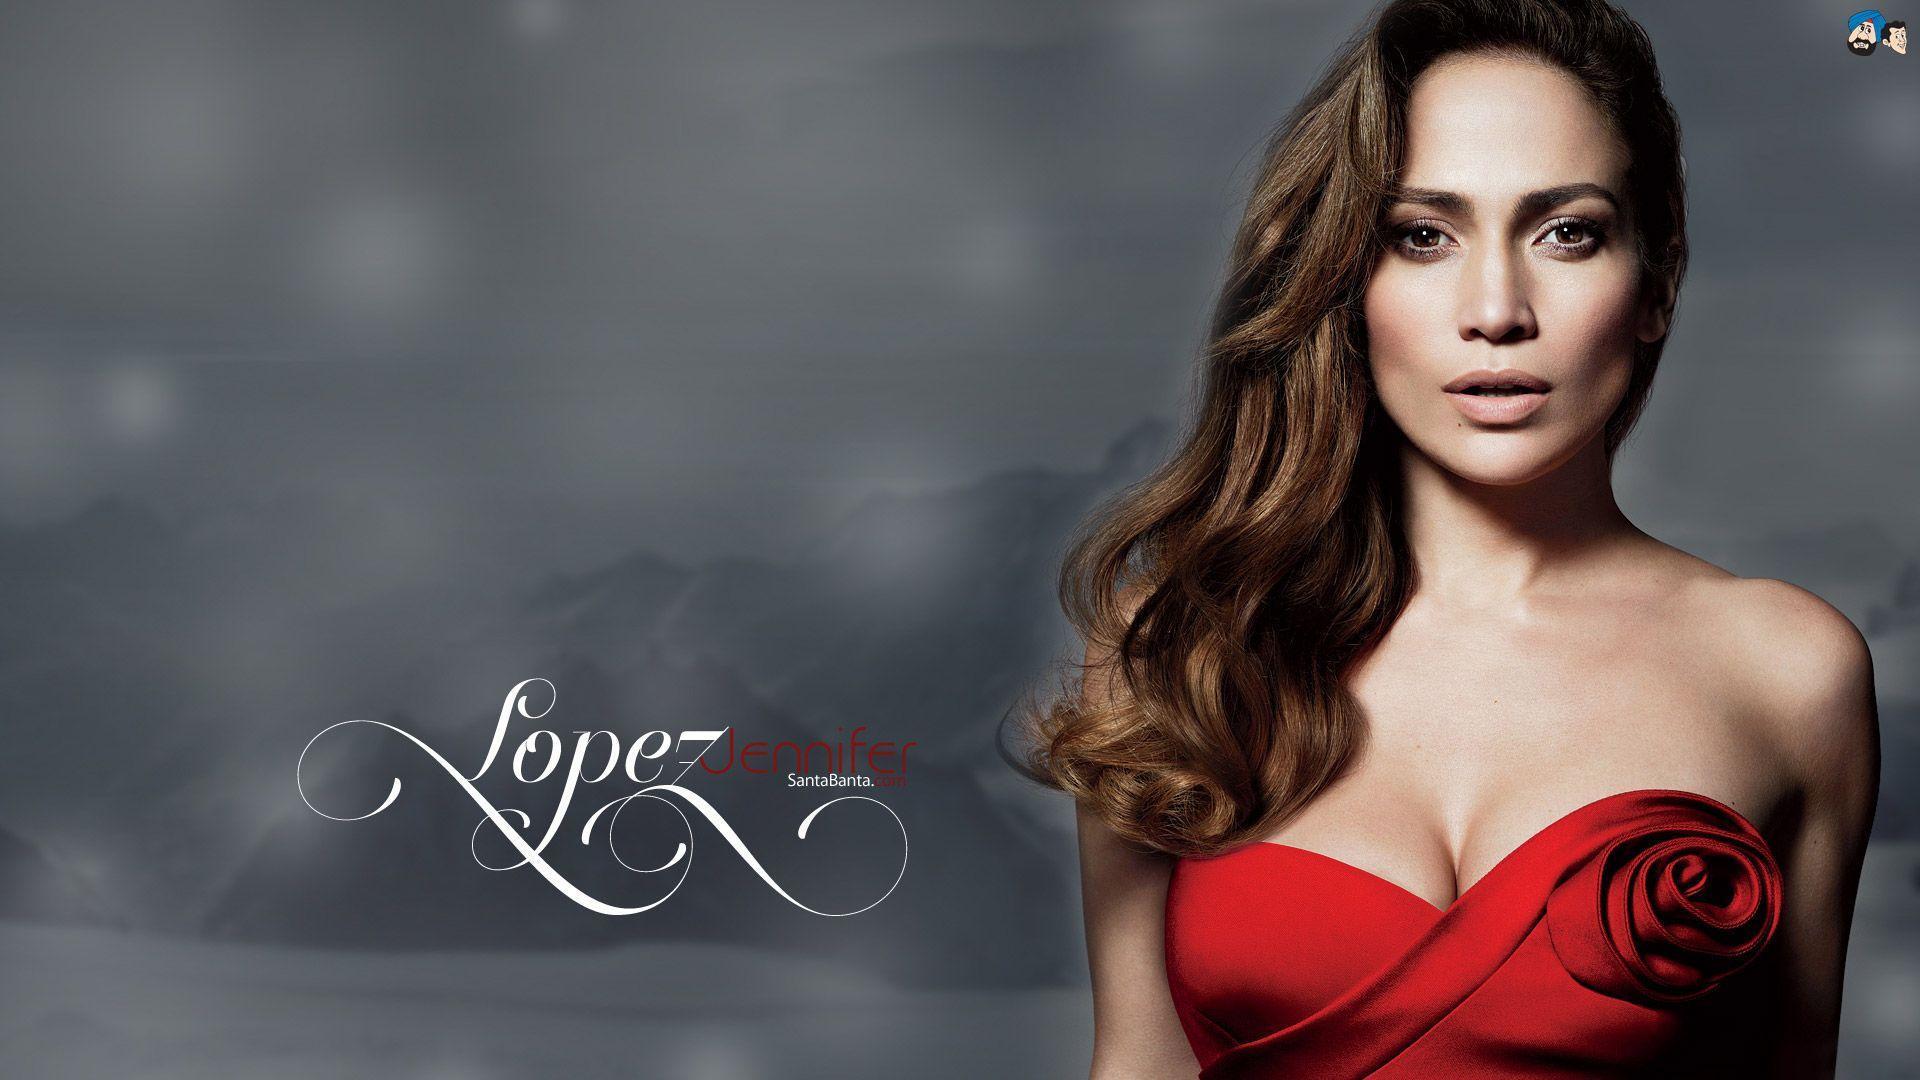 Jennifer Lopez 2015 Wallpapers, 49 Jennifer Lopez 2015 Image for